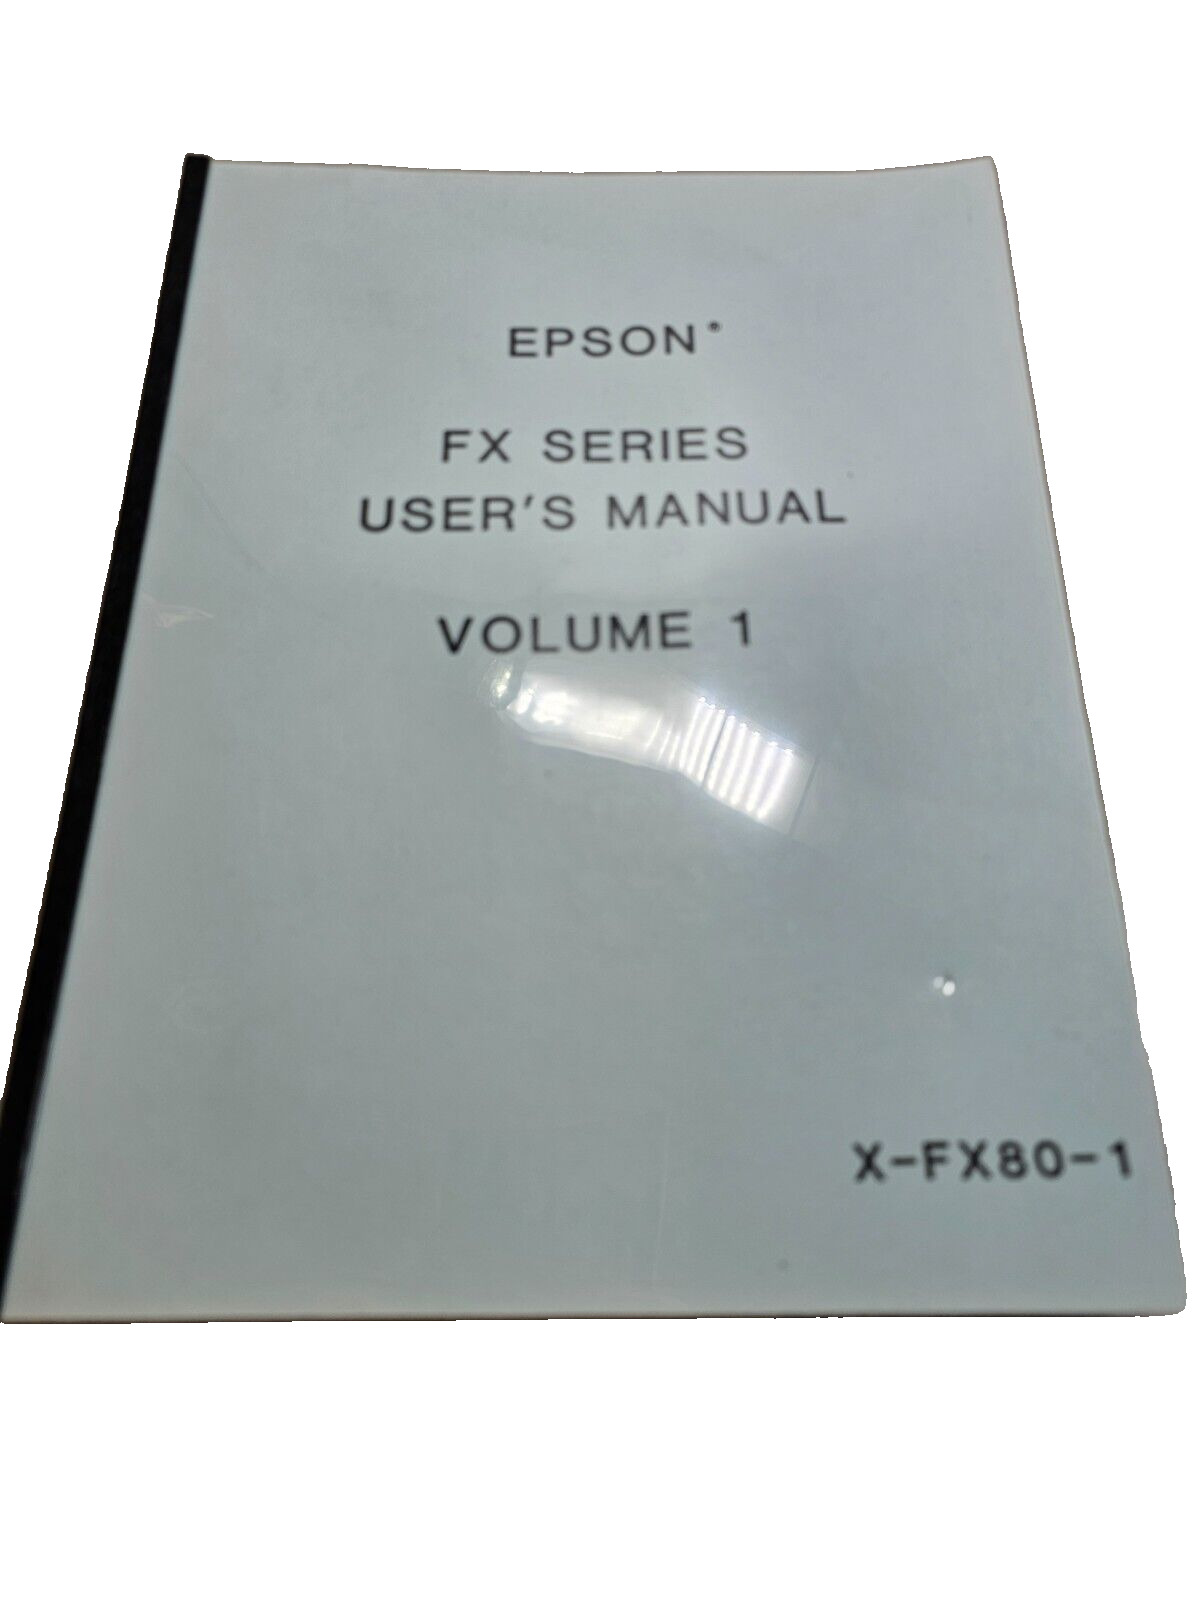 Vintage  1984 Epson FX Series User's Manual Volume 1 X-FX80-1, Reprint?